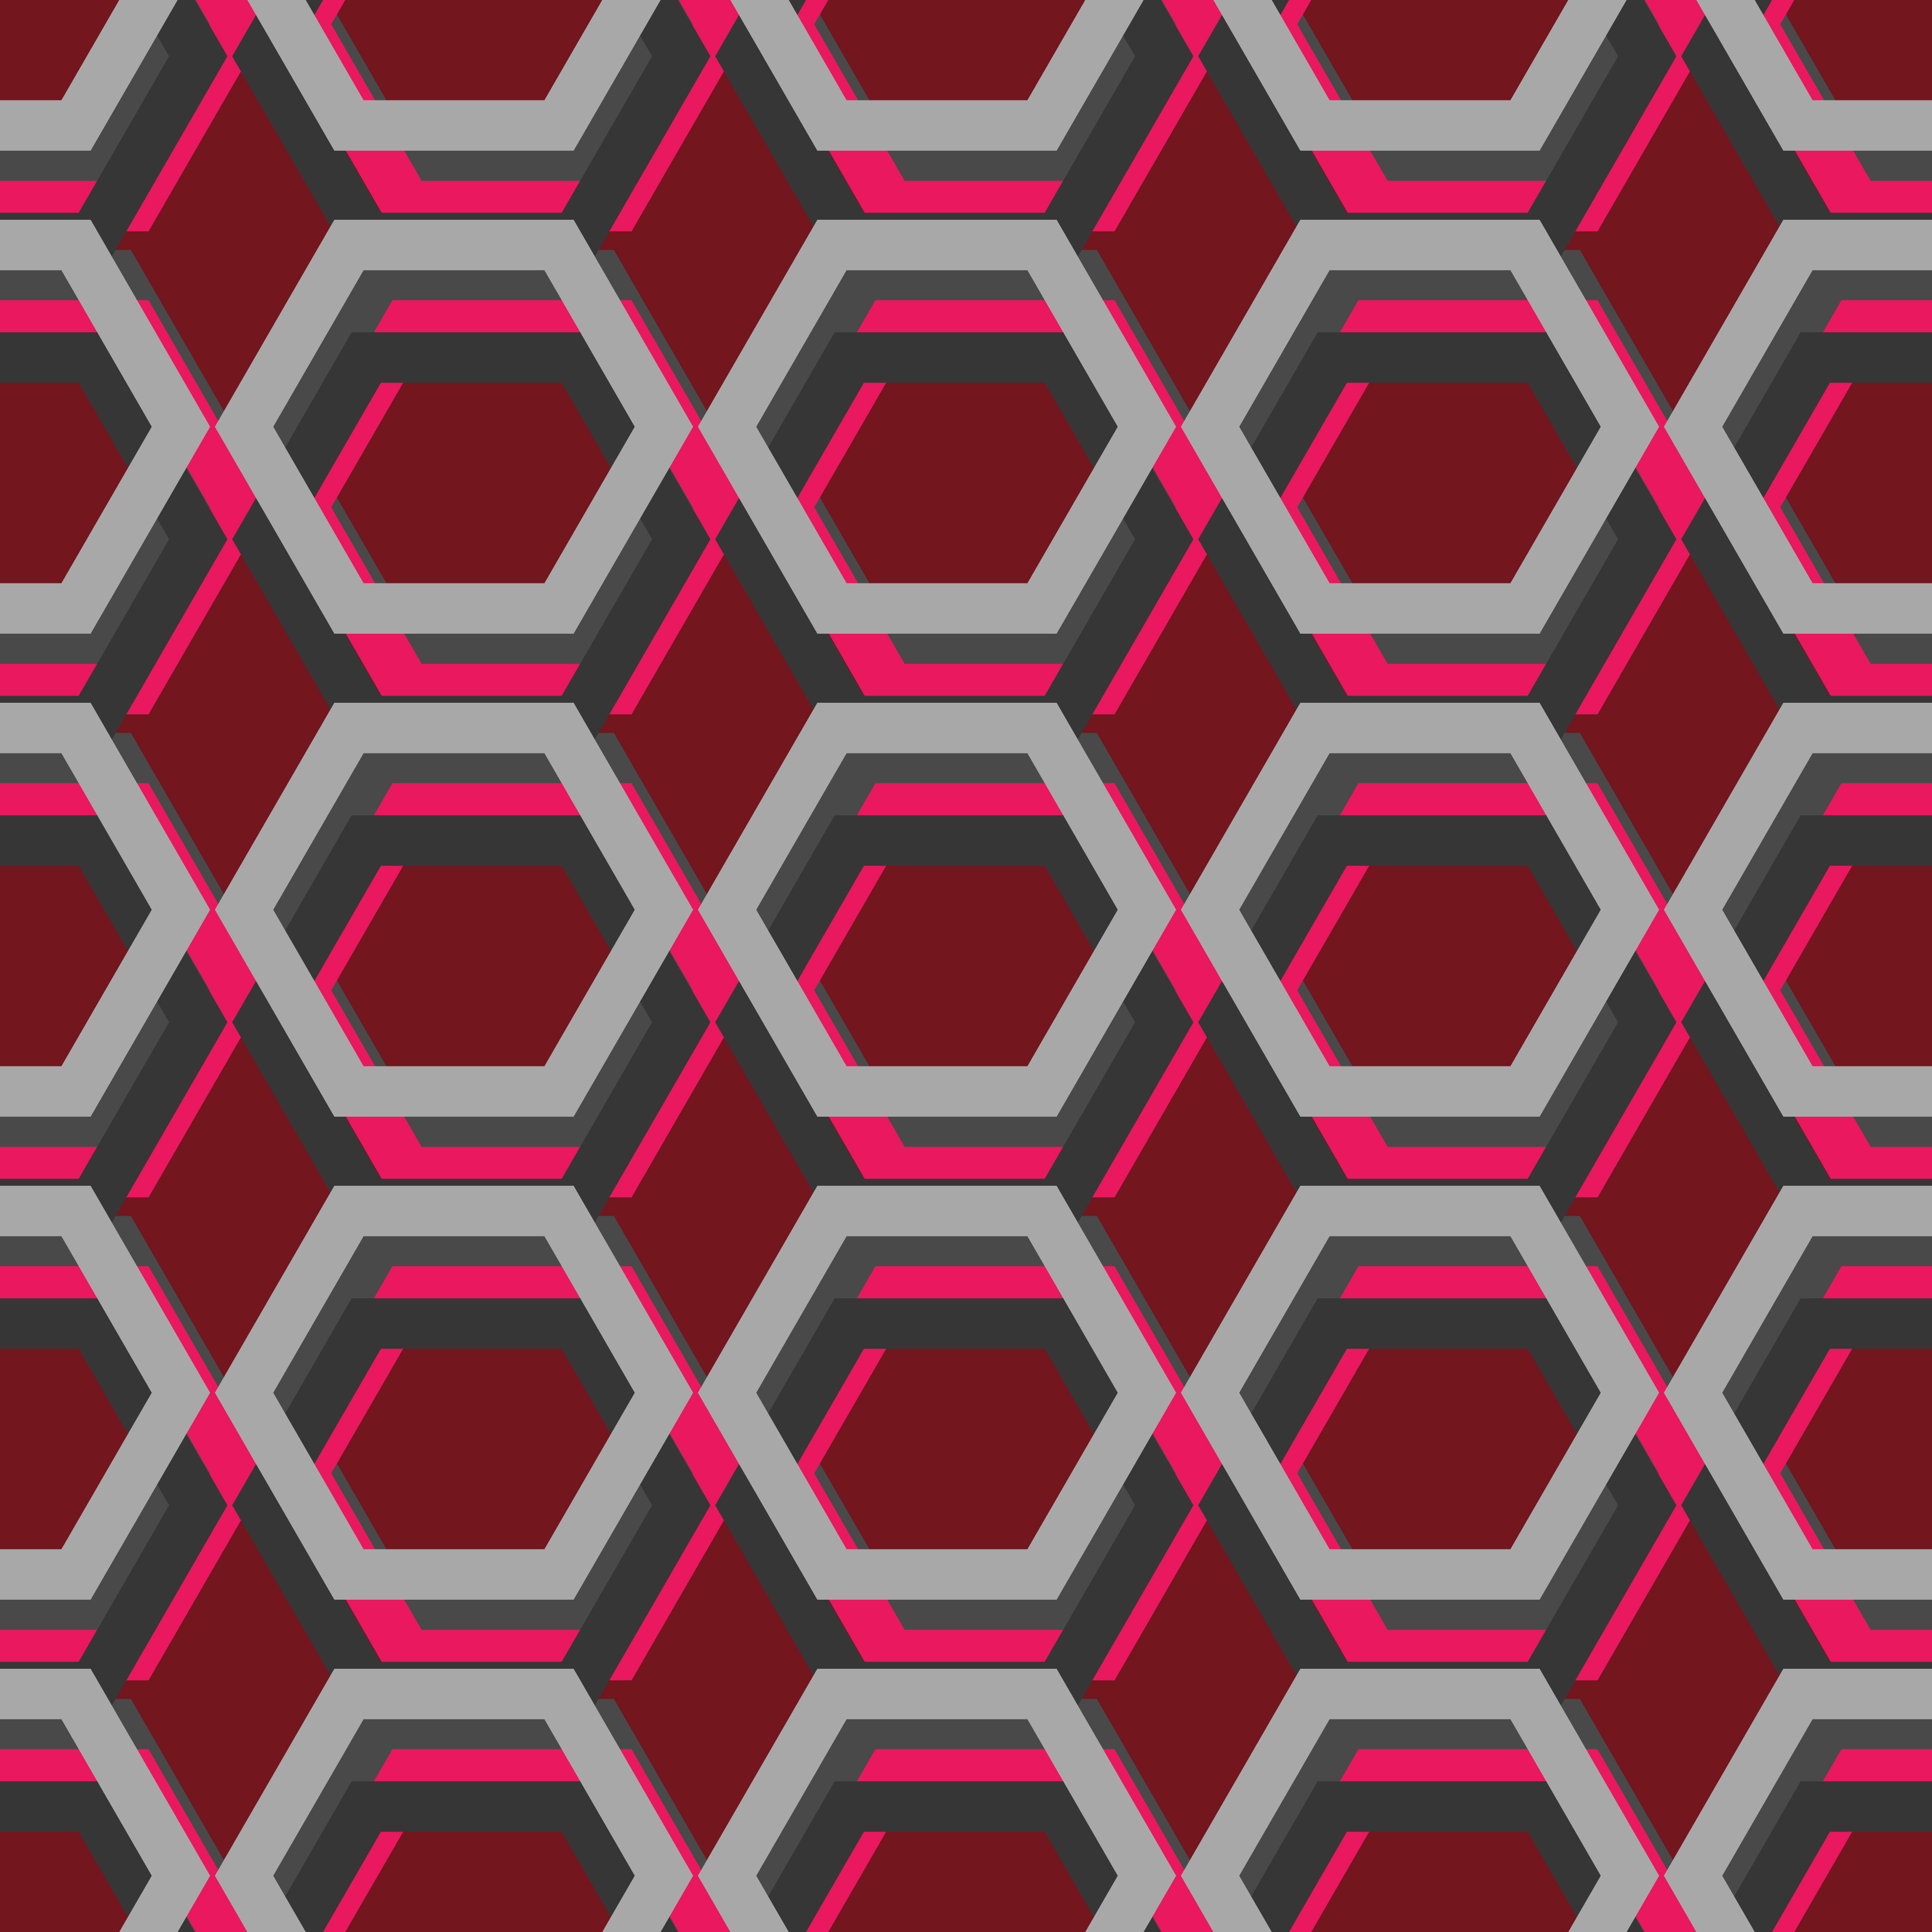 Hexagon seamless pattern - Download Free Vectors, Clipart Graphics & Vector Art